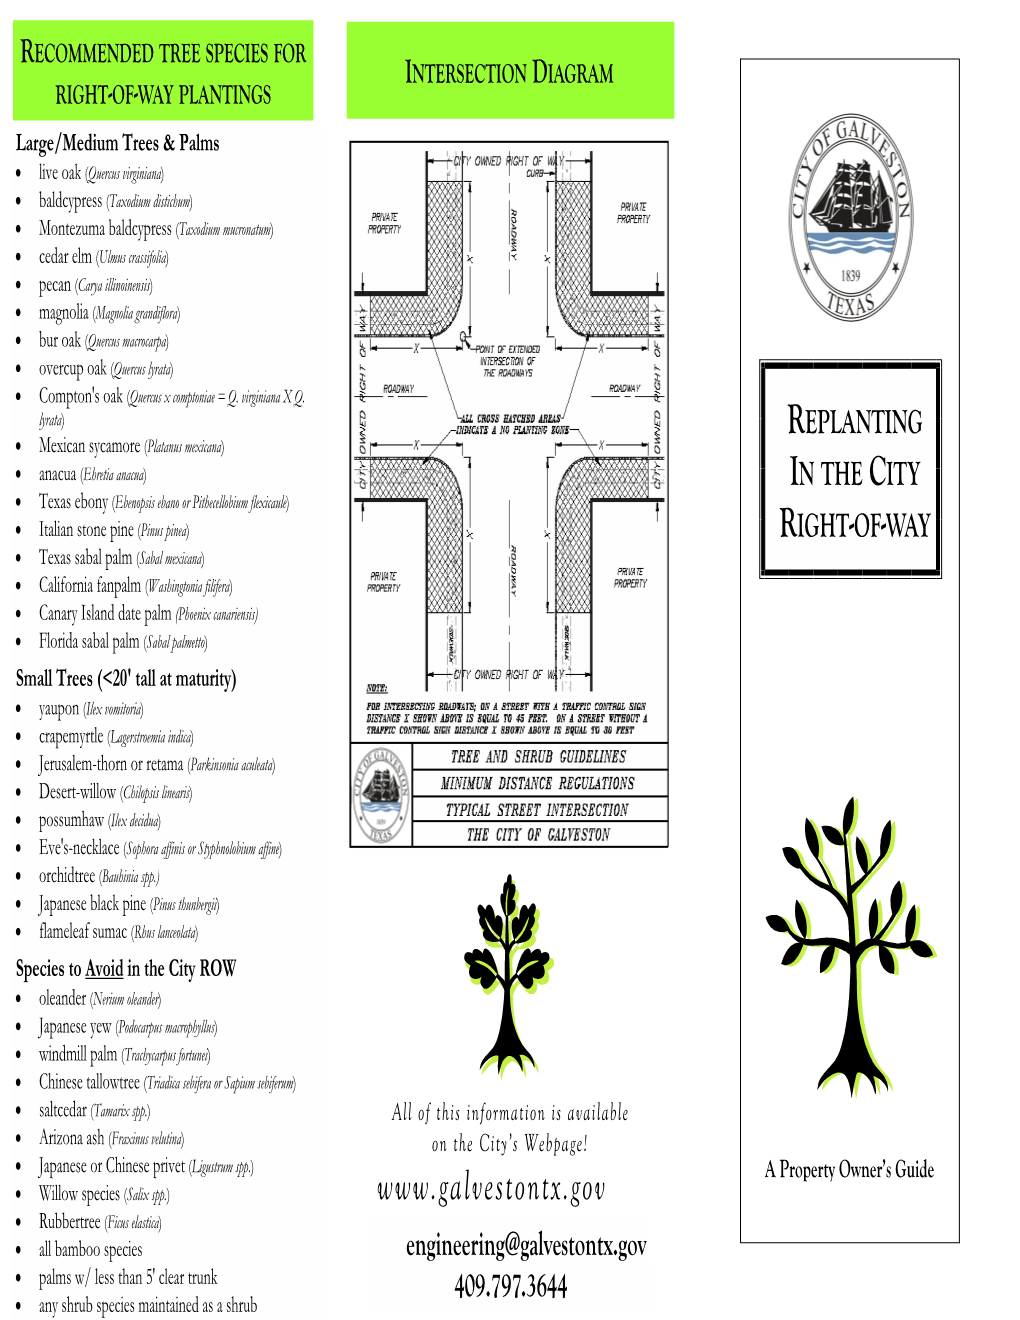 ROW Replanting Brochure 11-2-09